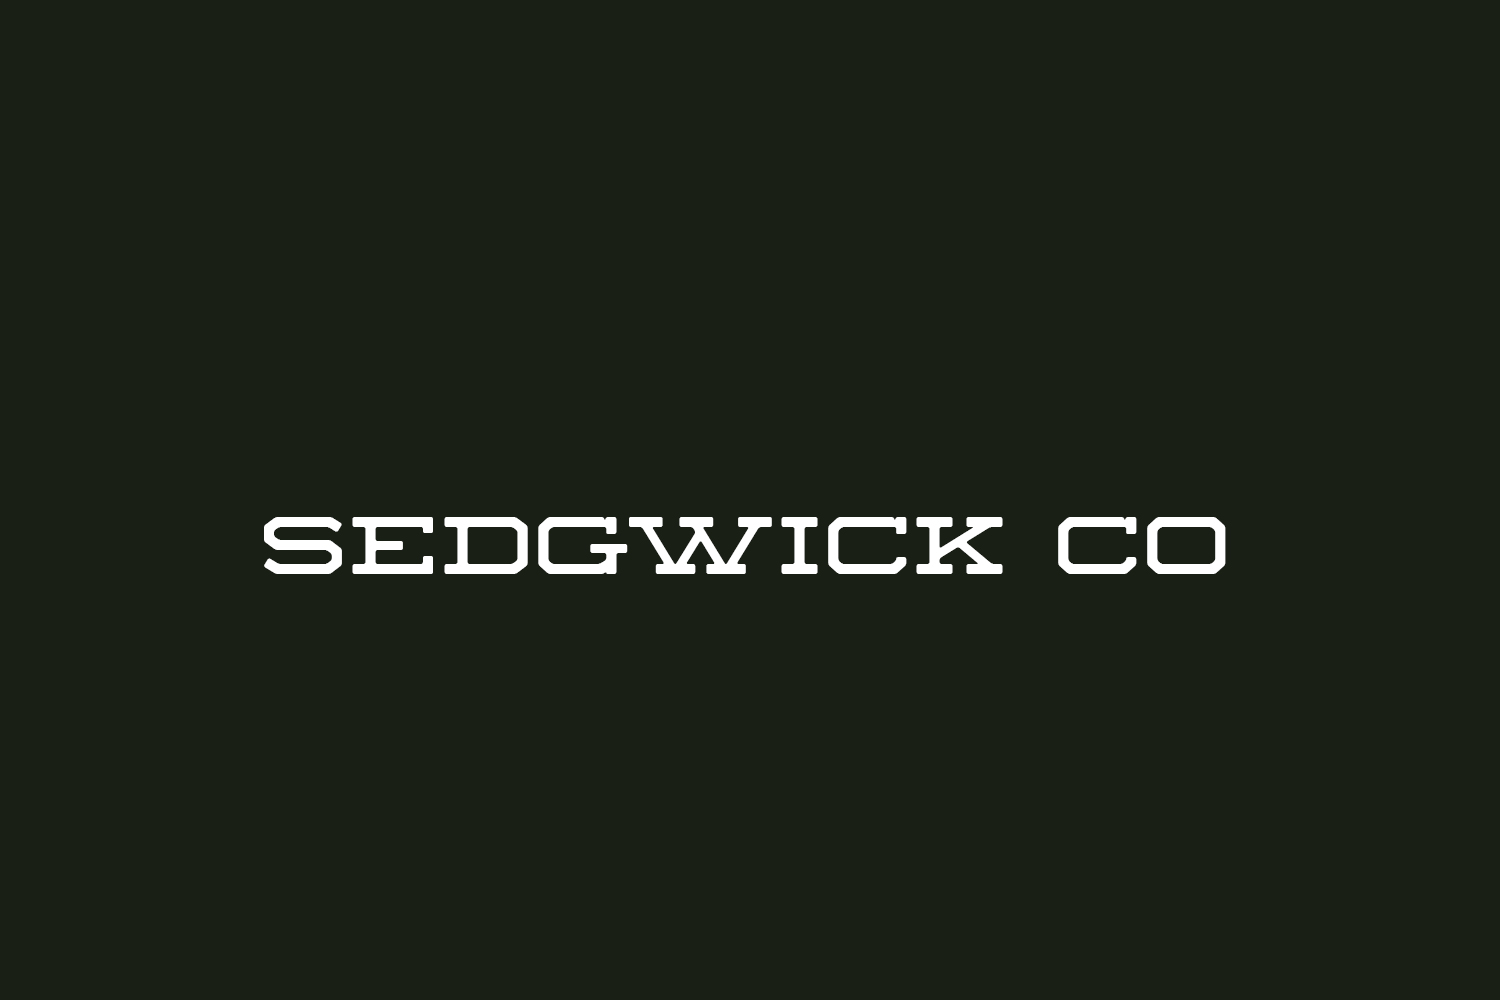 Sedgwick Co